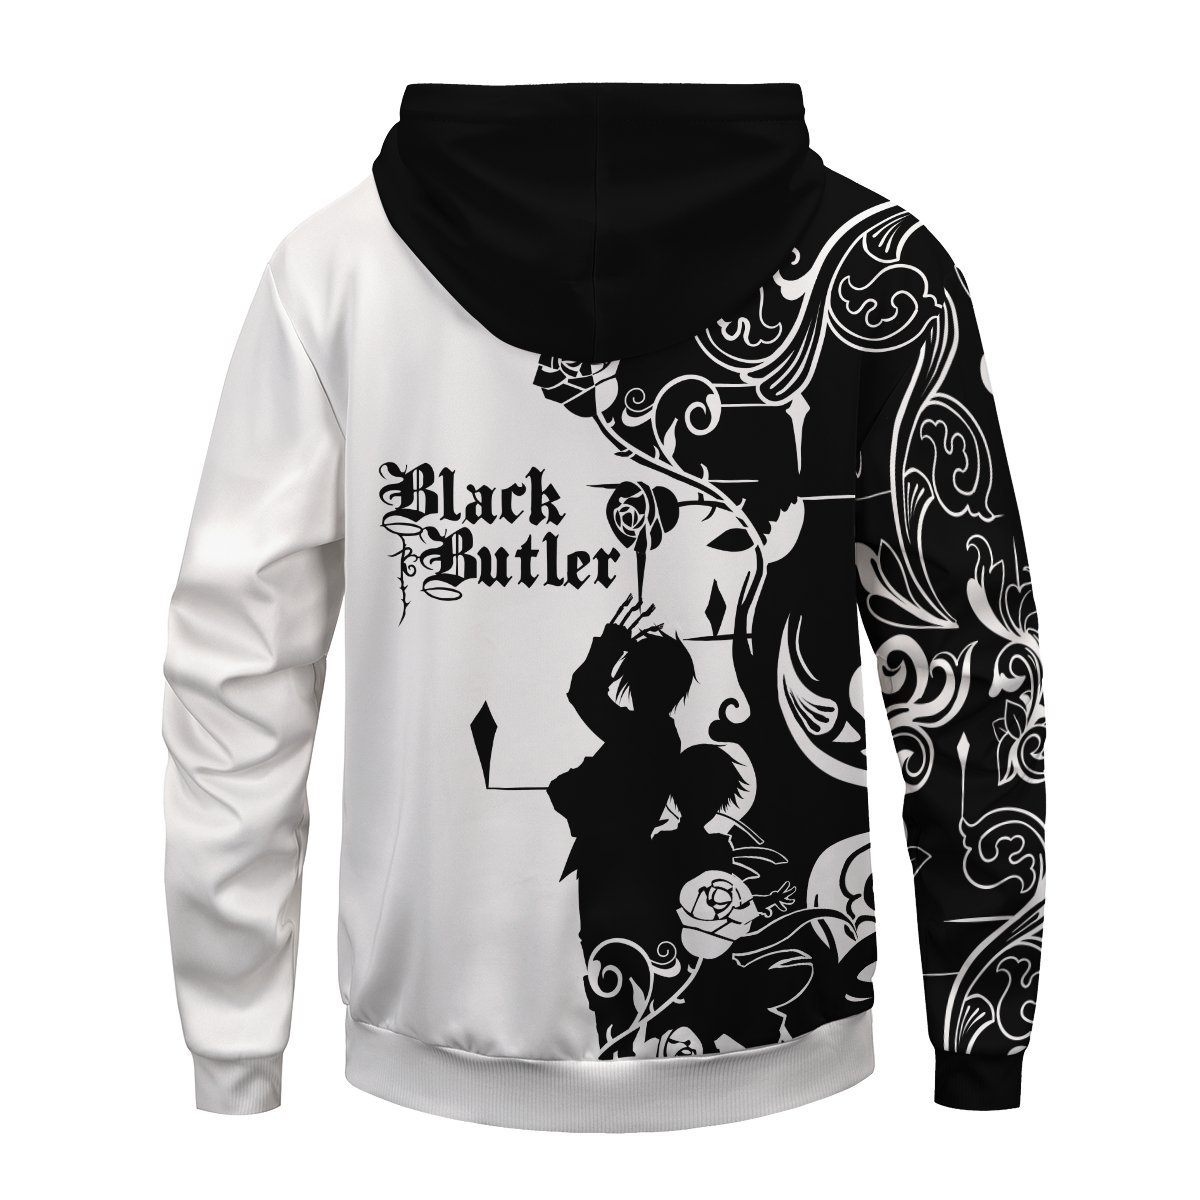 Black butler unisex pullover hoodie back